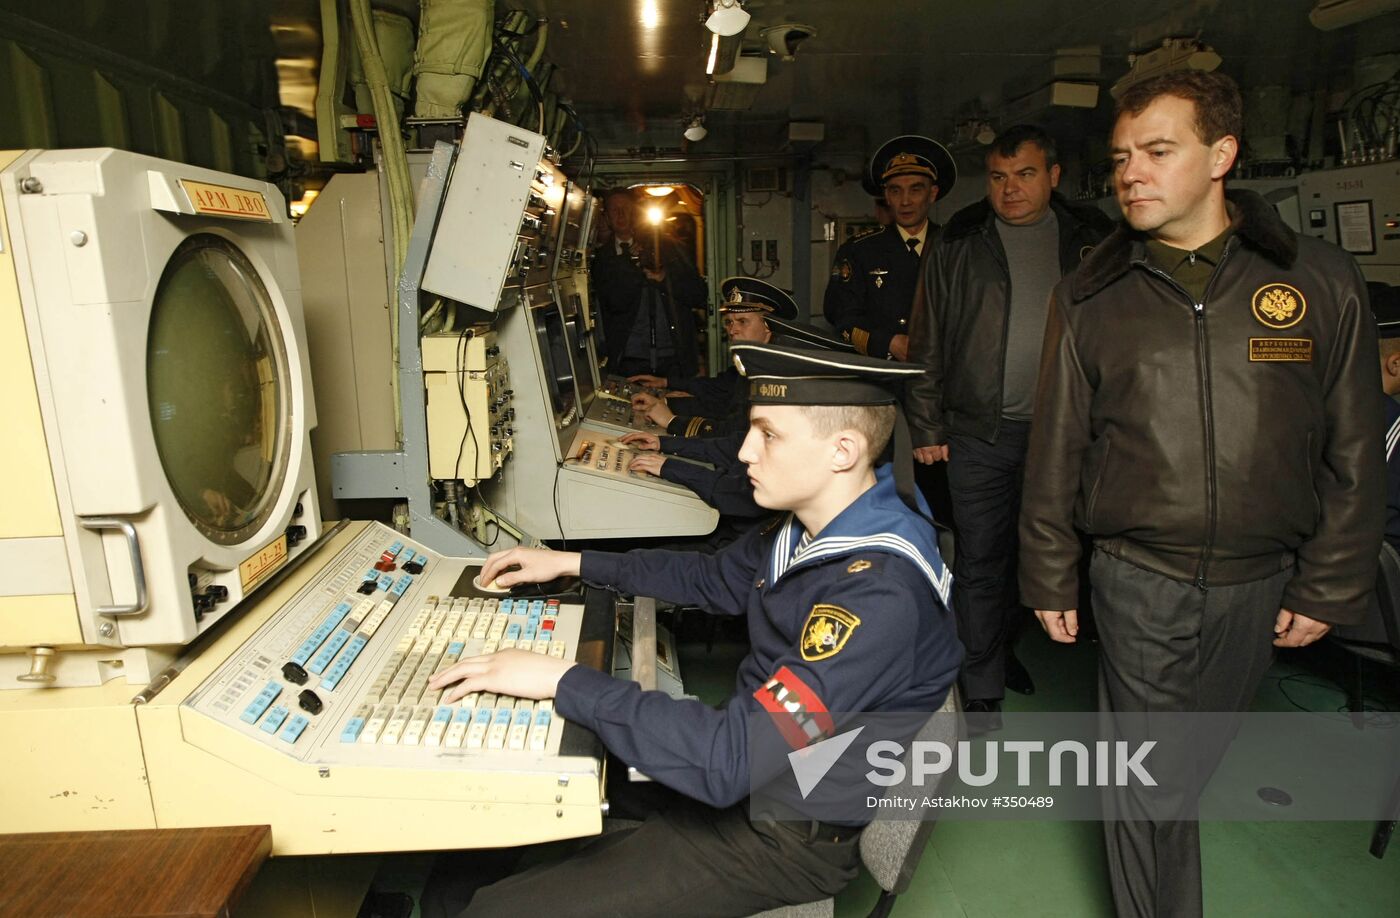 President Medvedev aboard the Admiral Kuznetsov cruiser